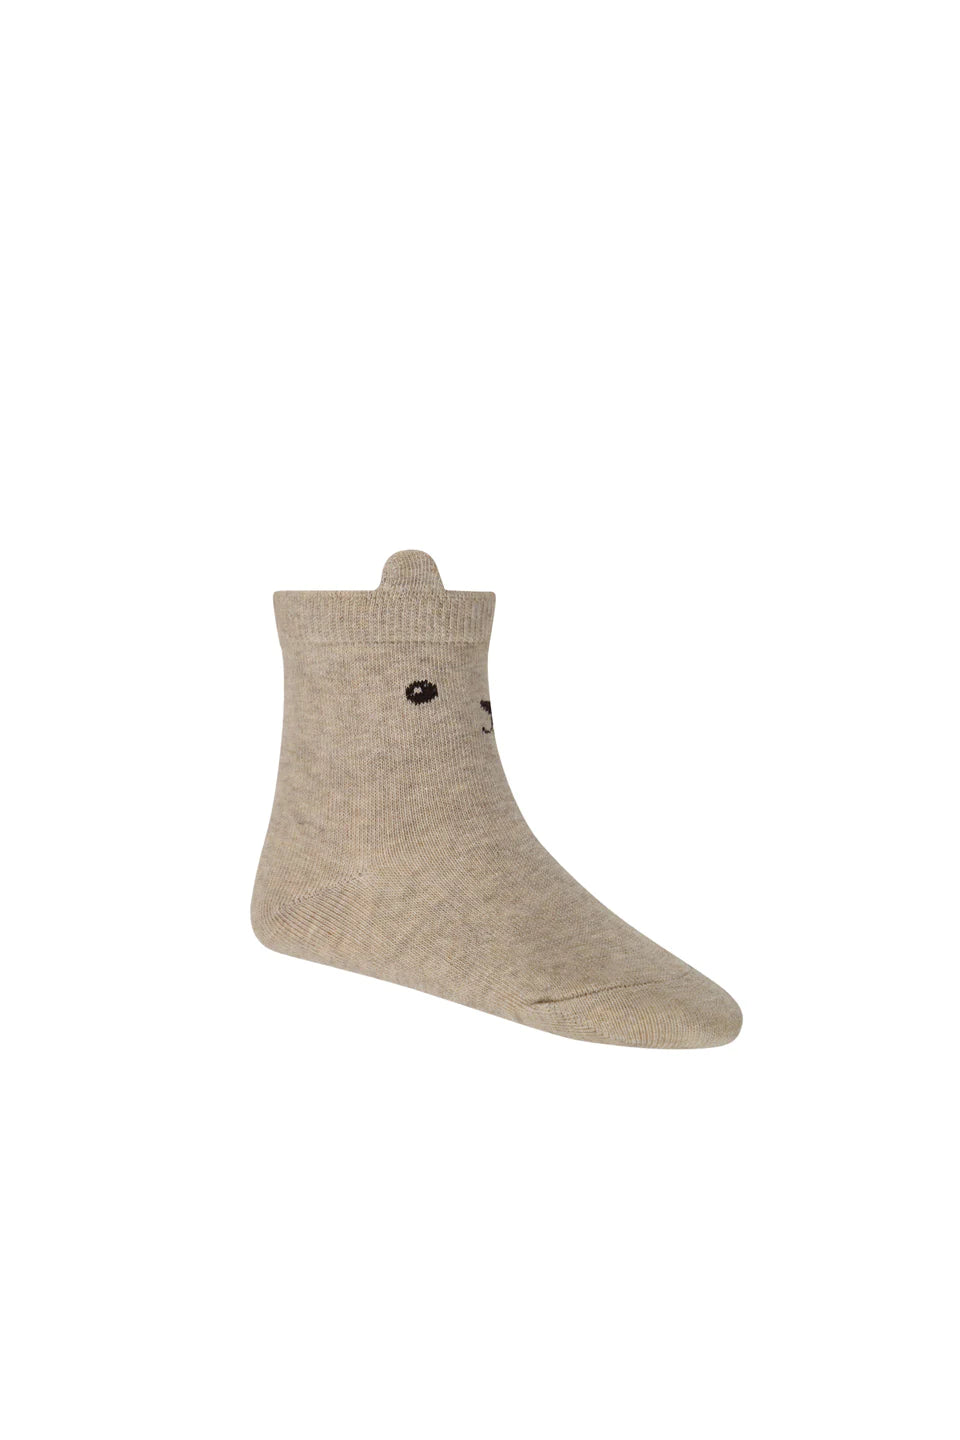 George Bear Ankle Sock - Sand Marle